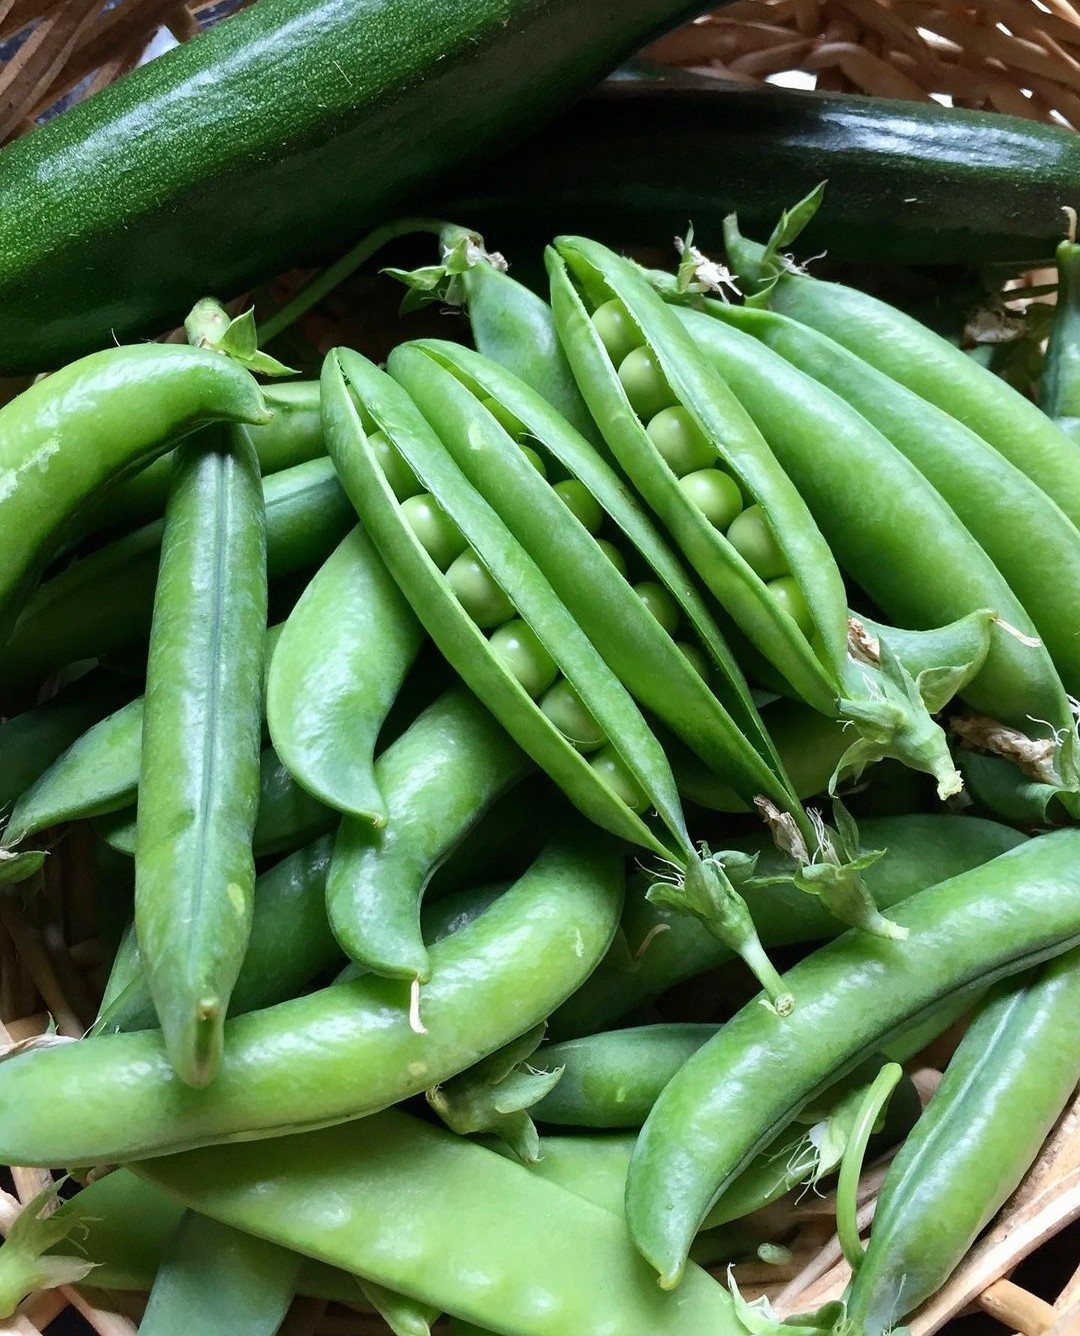 Freshly picked garden peas